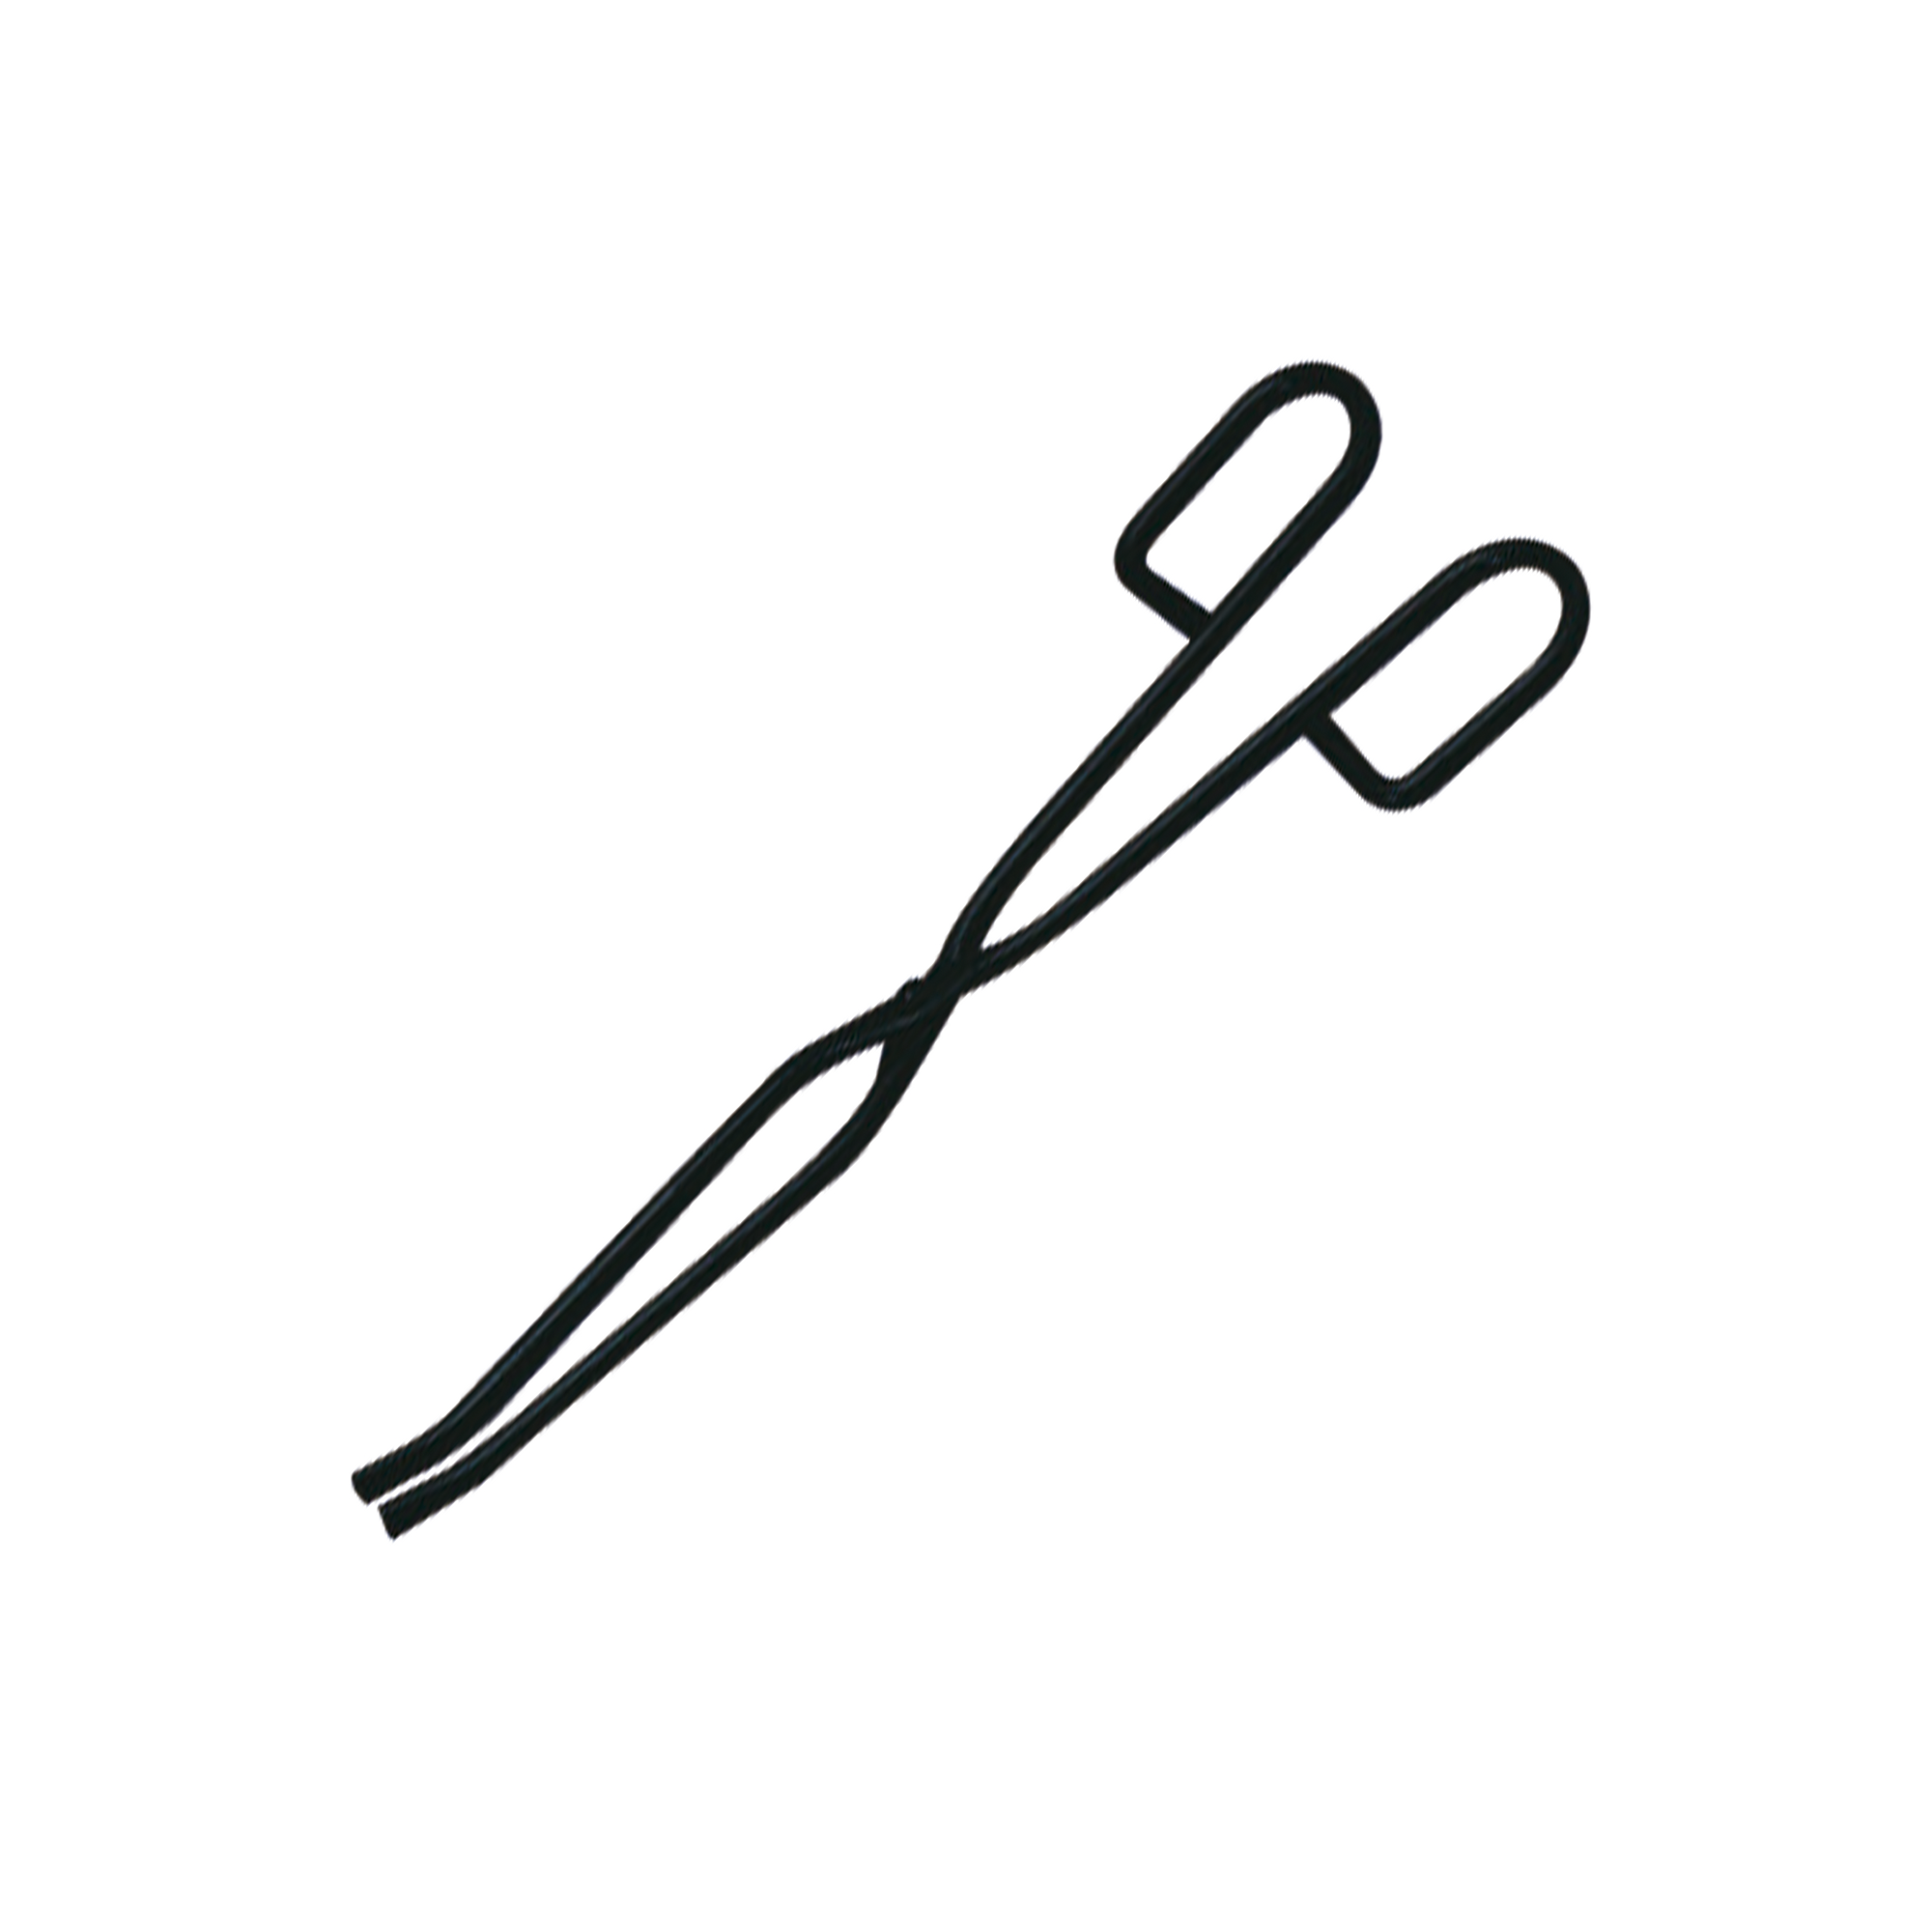 laboratory tongs drawing